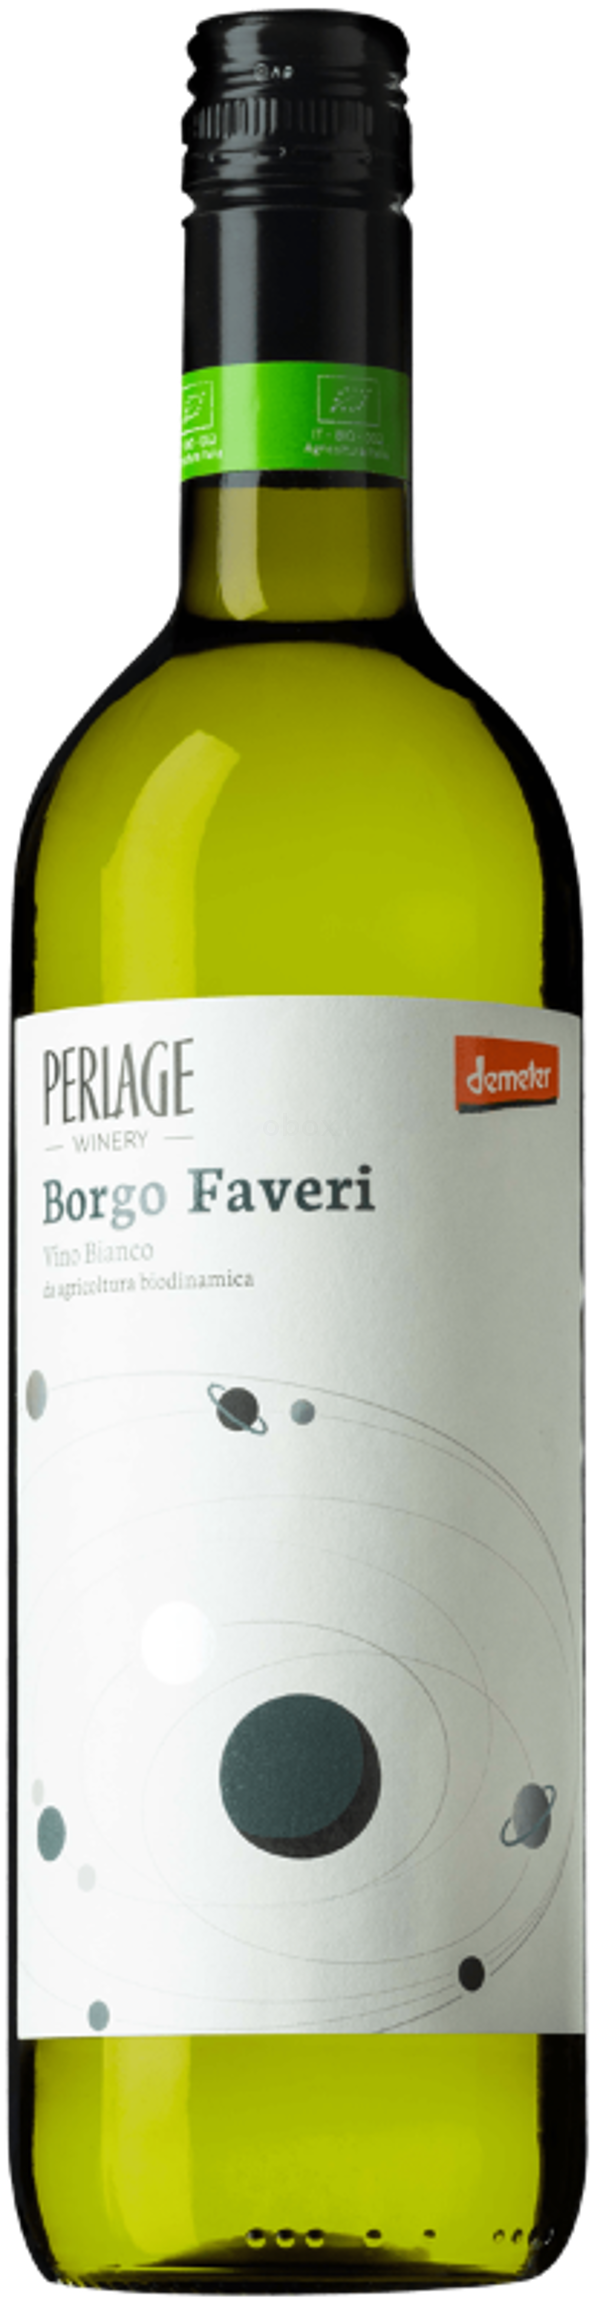 Produktfoto zu Borgo Faveri weiß